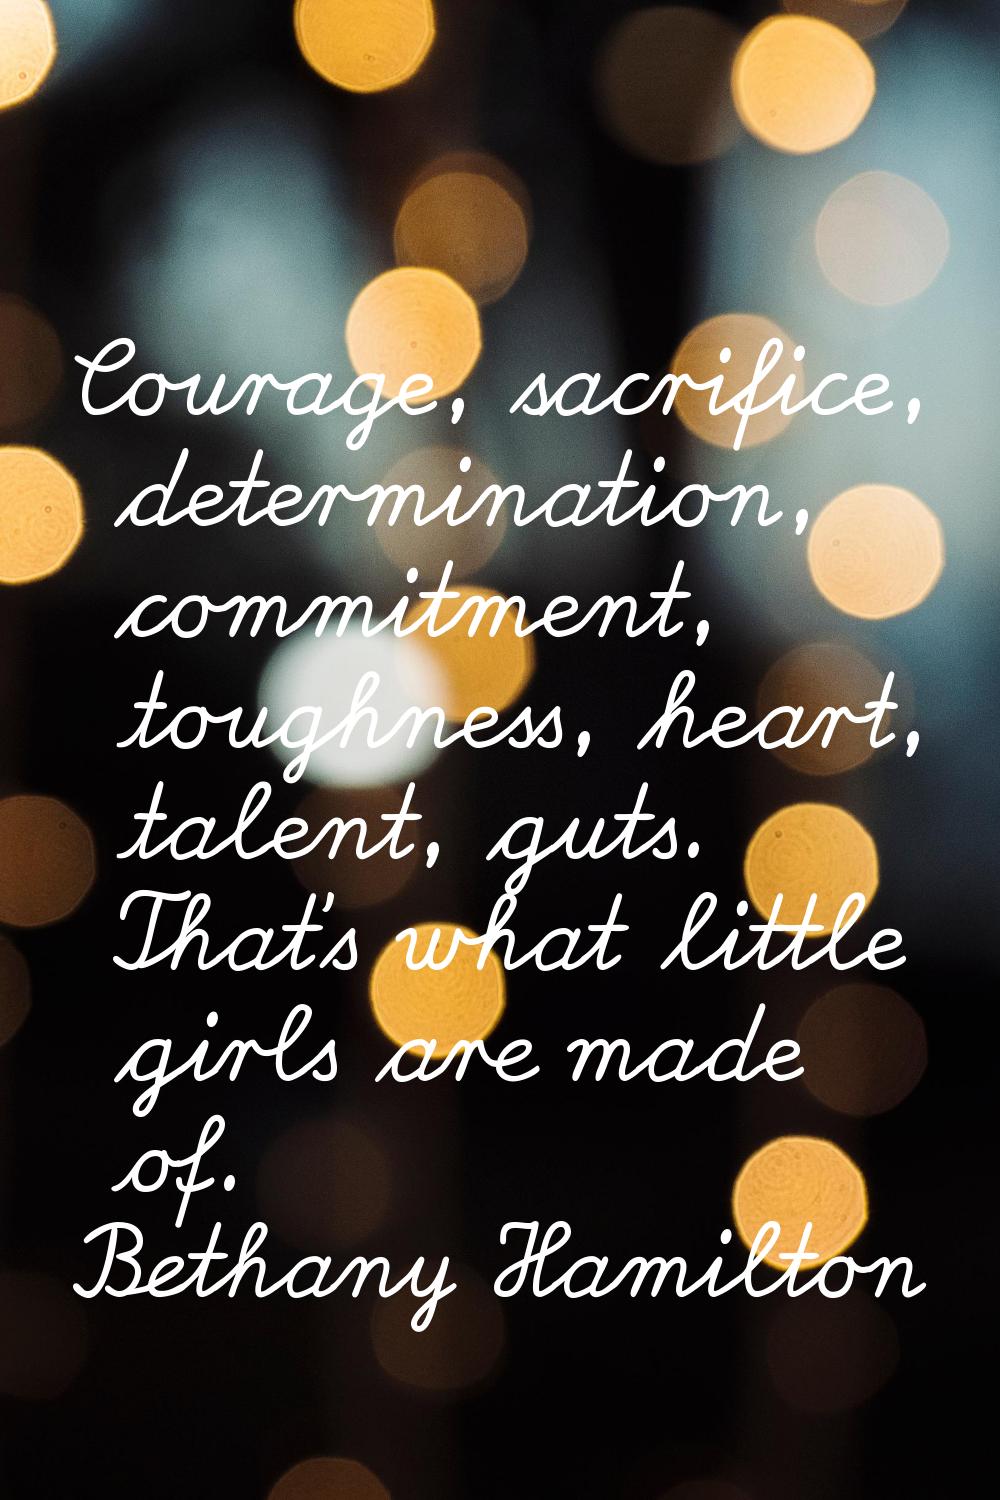 Courage, sacrifice, determination, commitment, toughness, heart, talent, guts. That's what little g